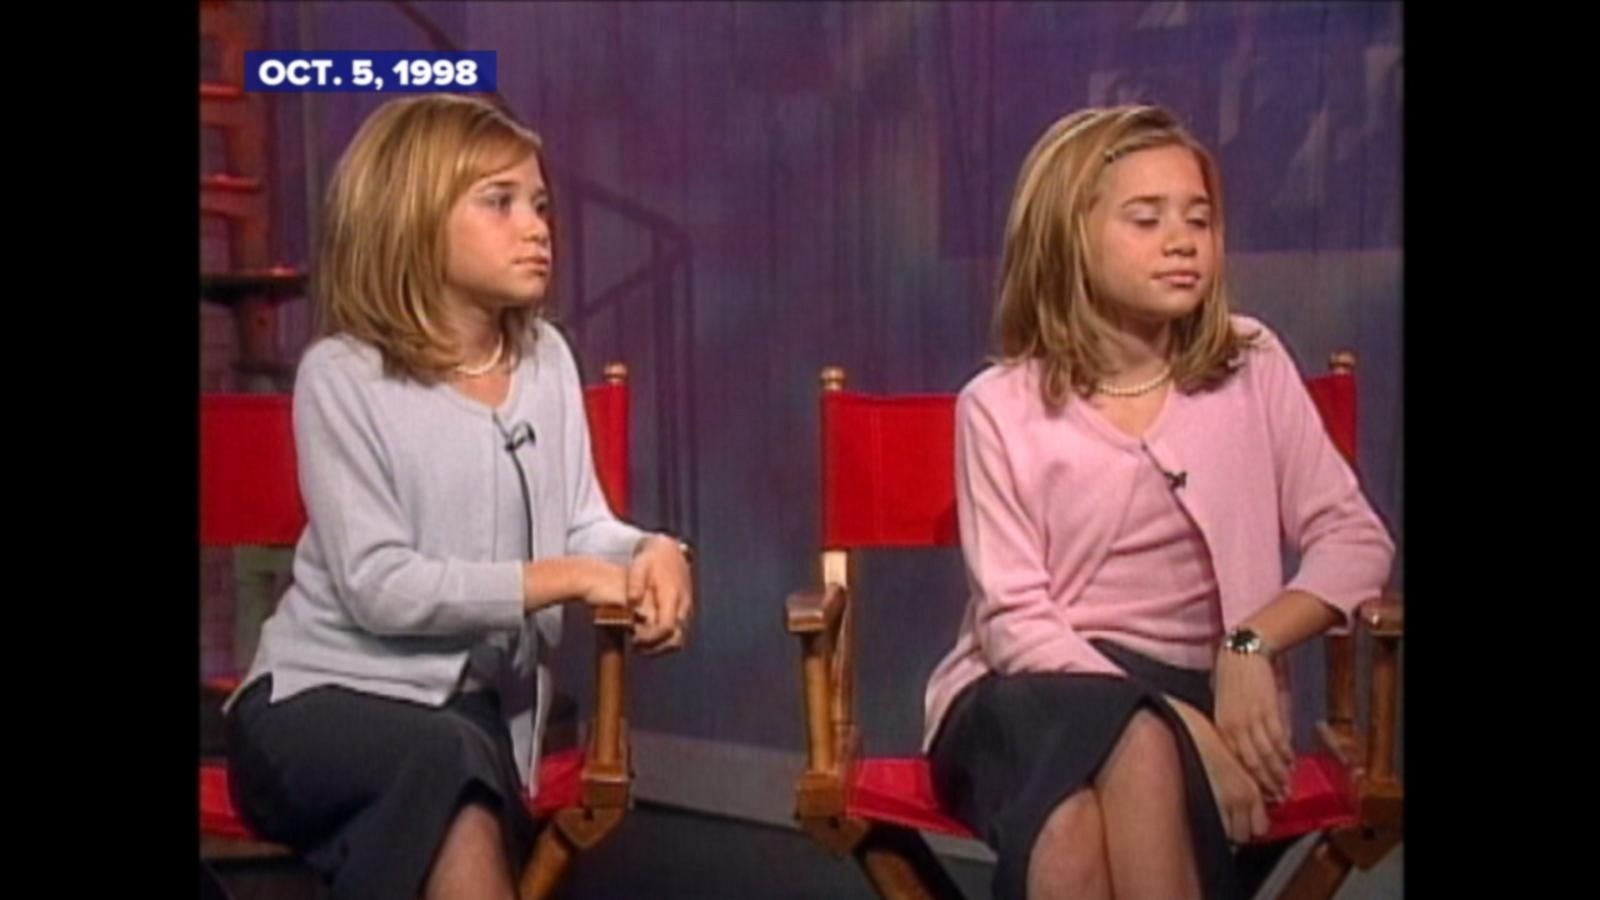 Oct. 5, 1998 The Olsen twins on schoolwork, script work Good Morning